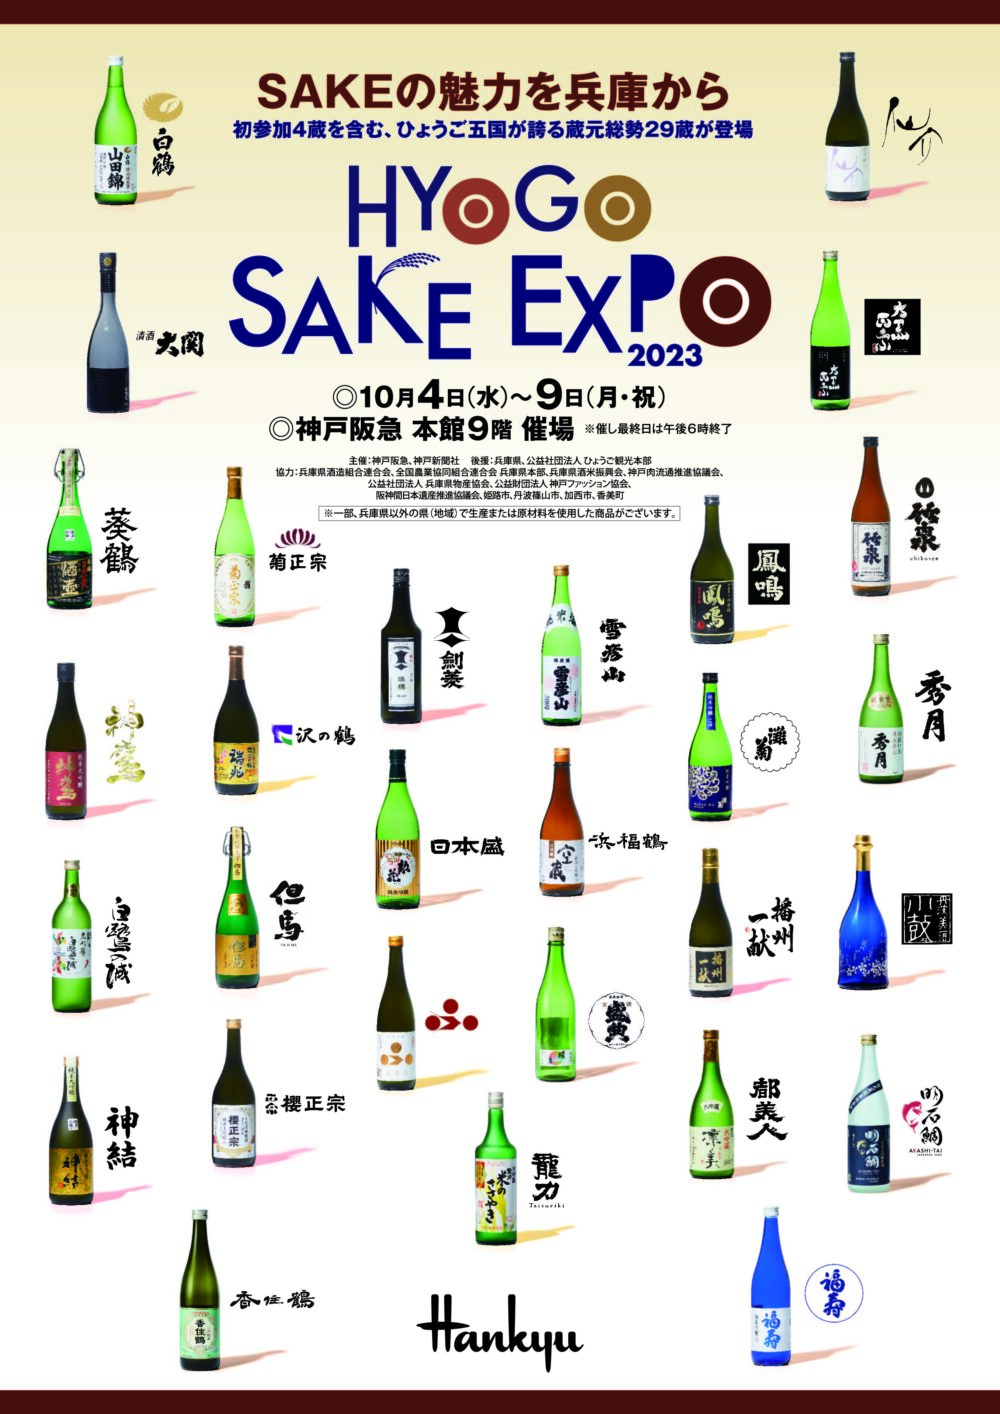 HYOGO SAKE EXPO 2023 日本酒 神戸阪急